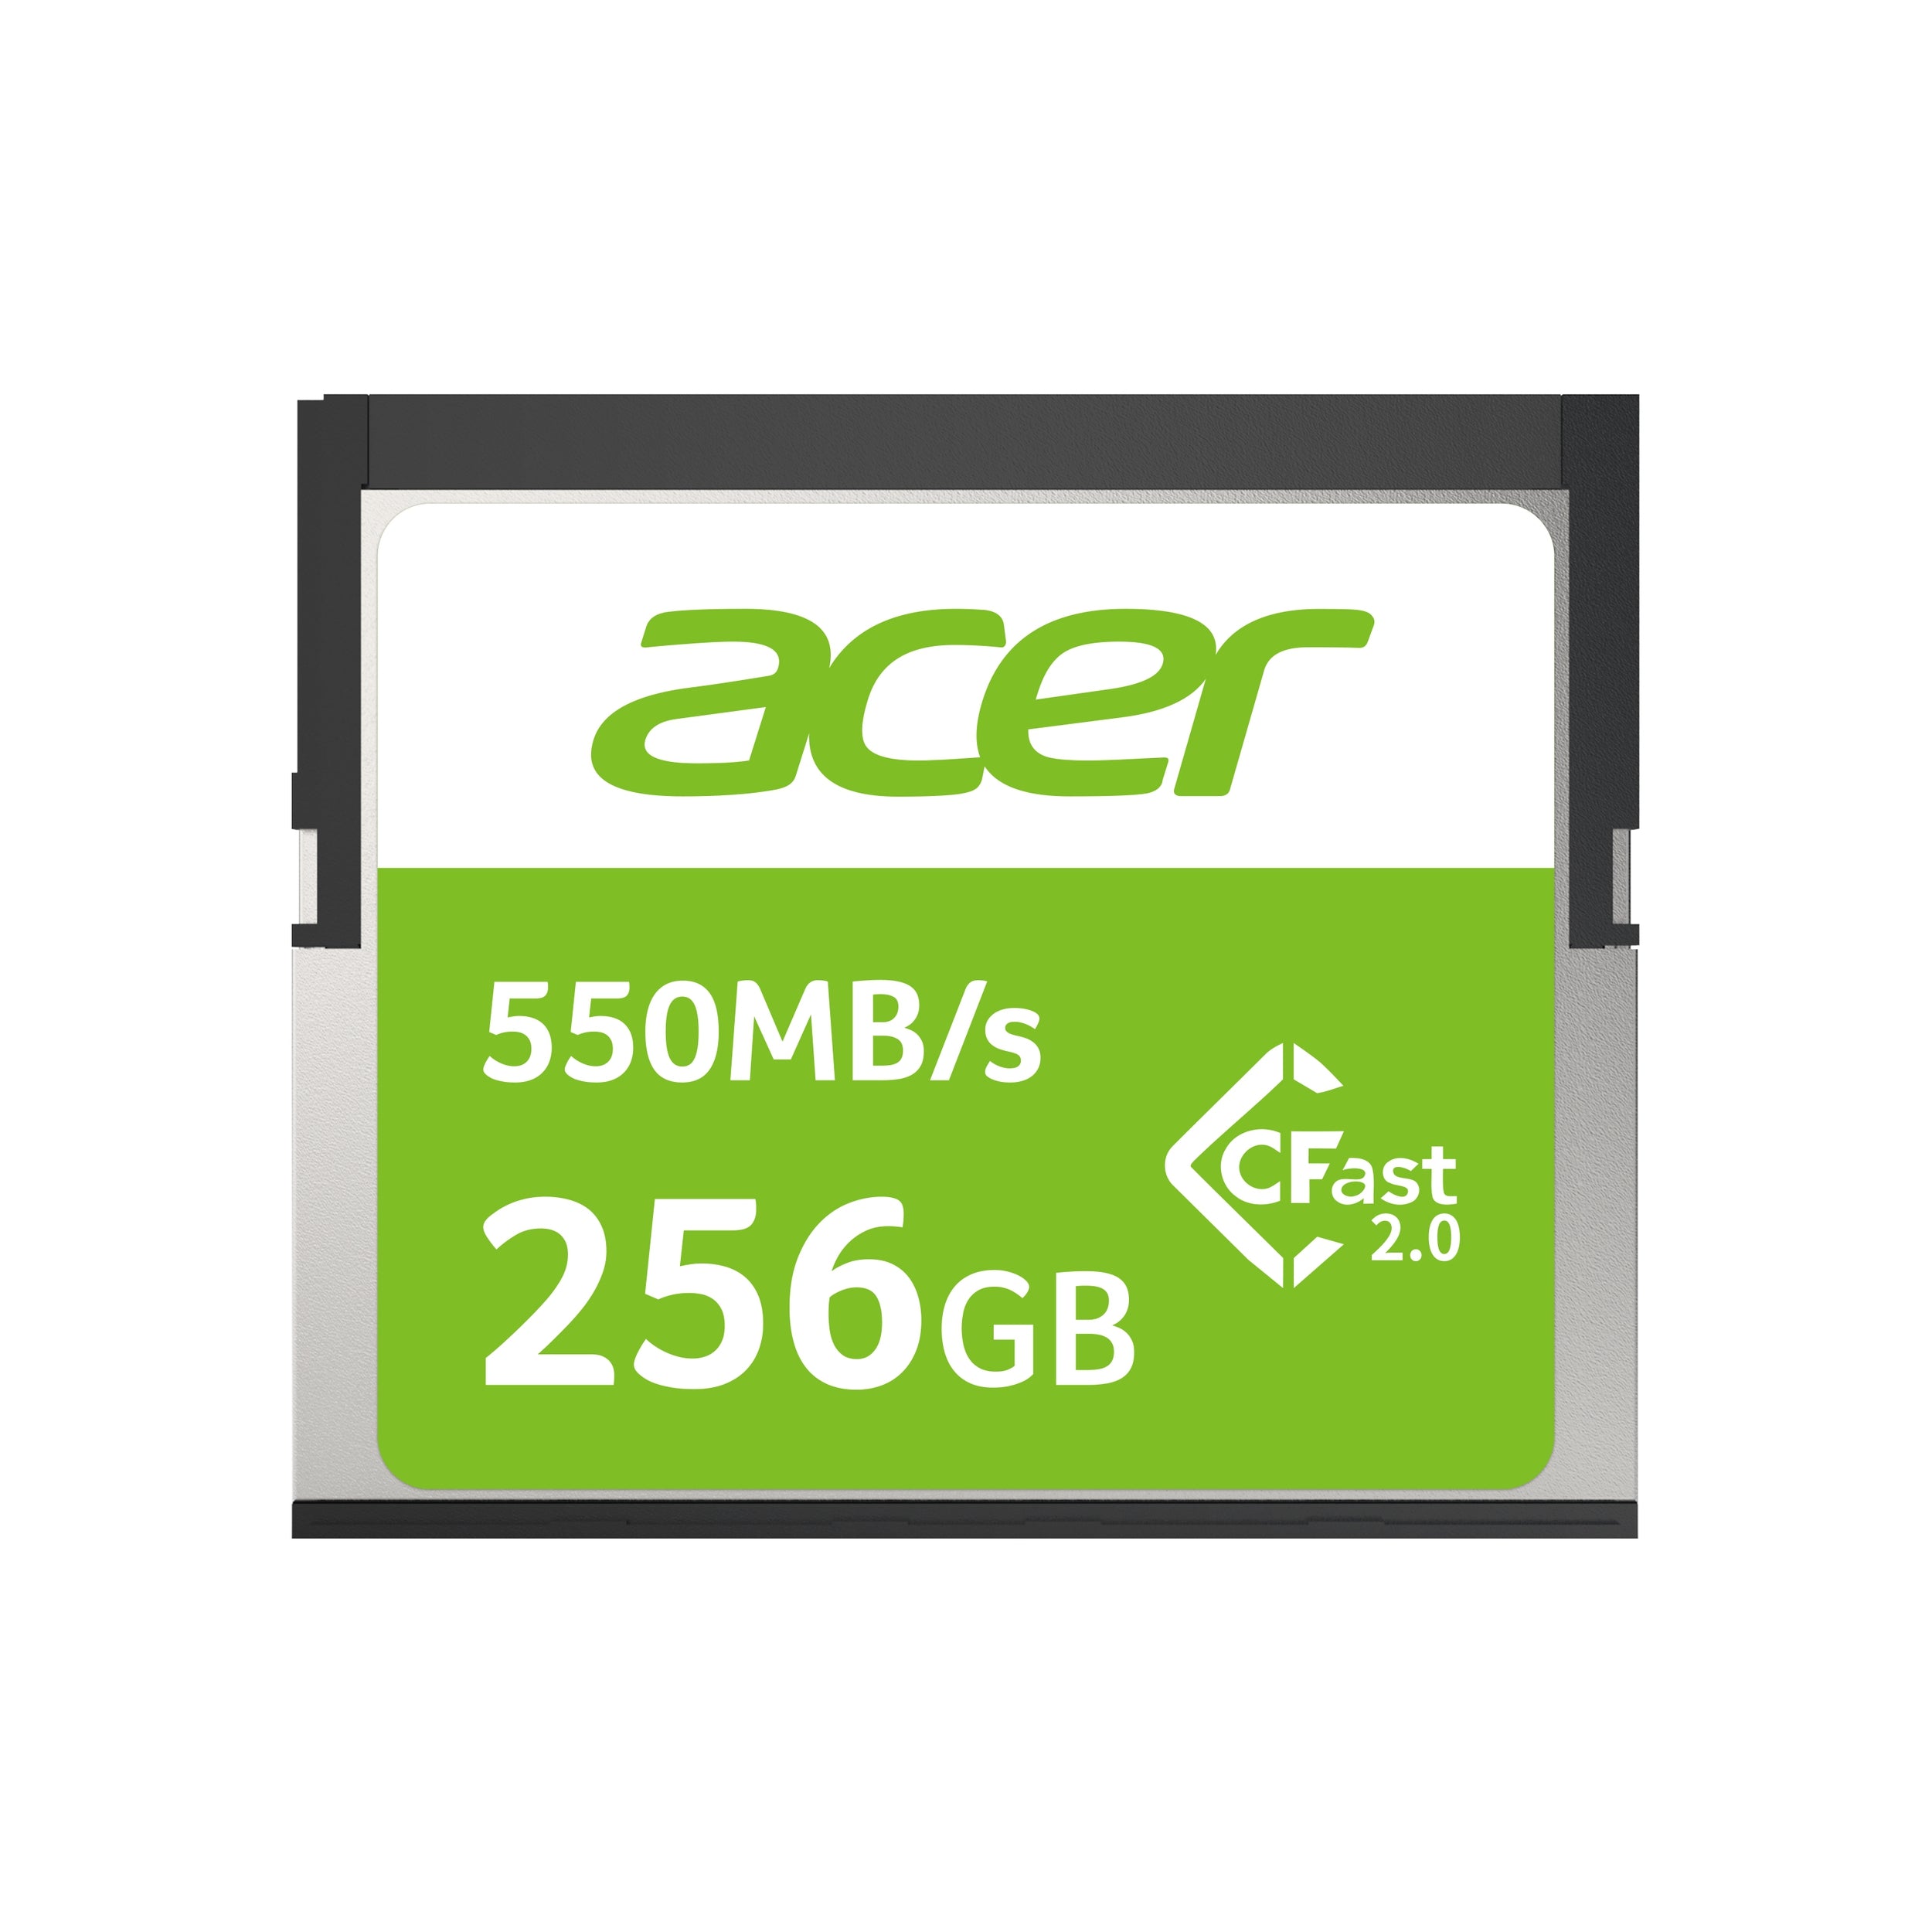 Memoria Acer Compact Flash 2.0 Cf100 256Gb 550 Mb/S (Bl.9Bwwa.315)